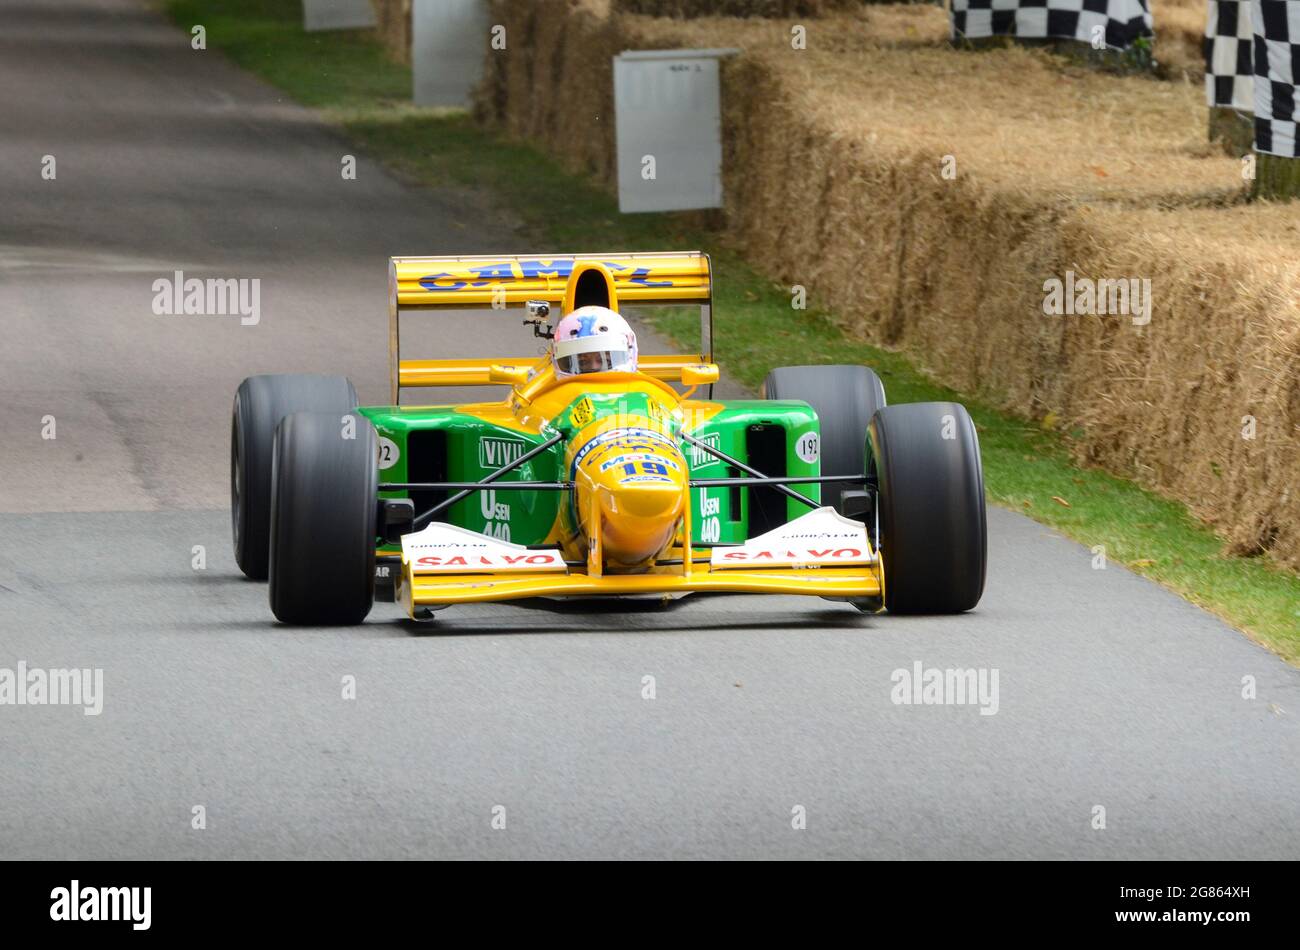 Benetton B192 Formula 1, Grand Prix car. Ex-Michael Schumacher Benetton Cosworth racing up the hill climb at the Goodwood Festival of Speed 2013 Stock Photo